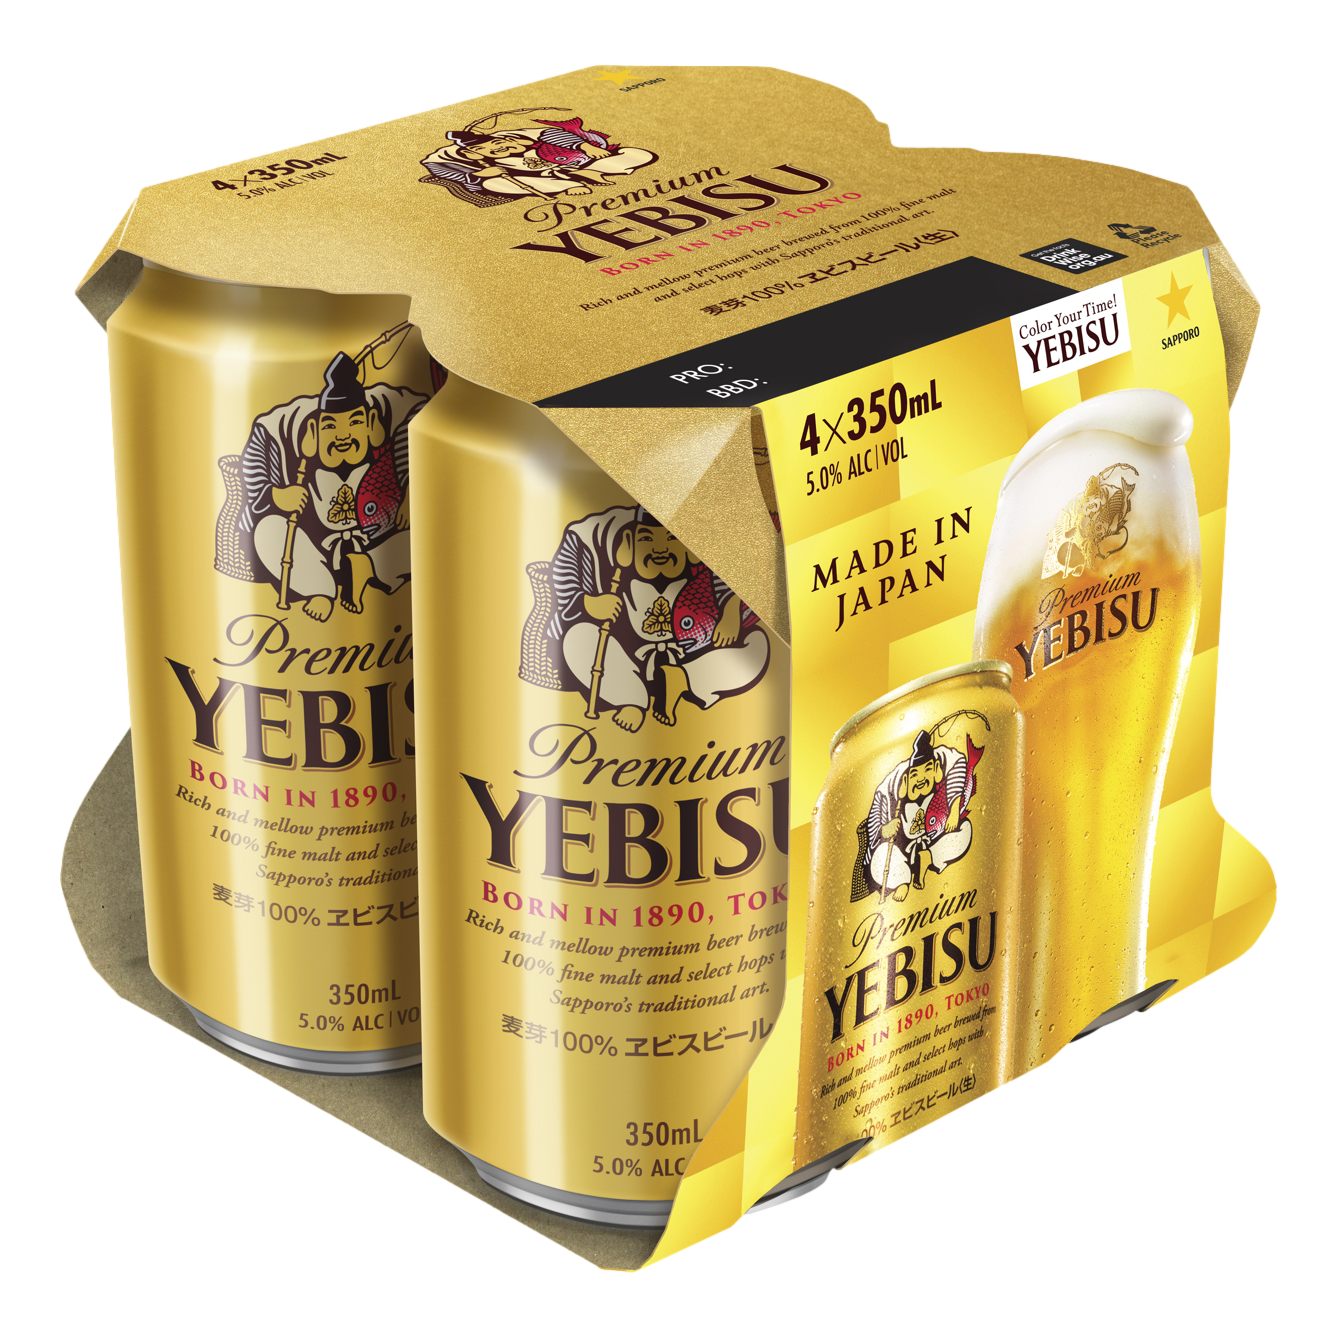 Yebisu Premium Malt Lager 350ml Can 4 Pack